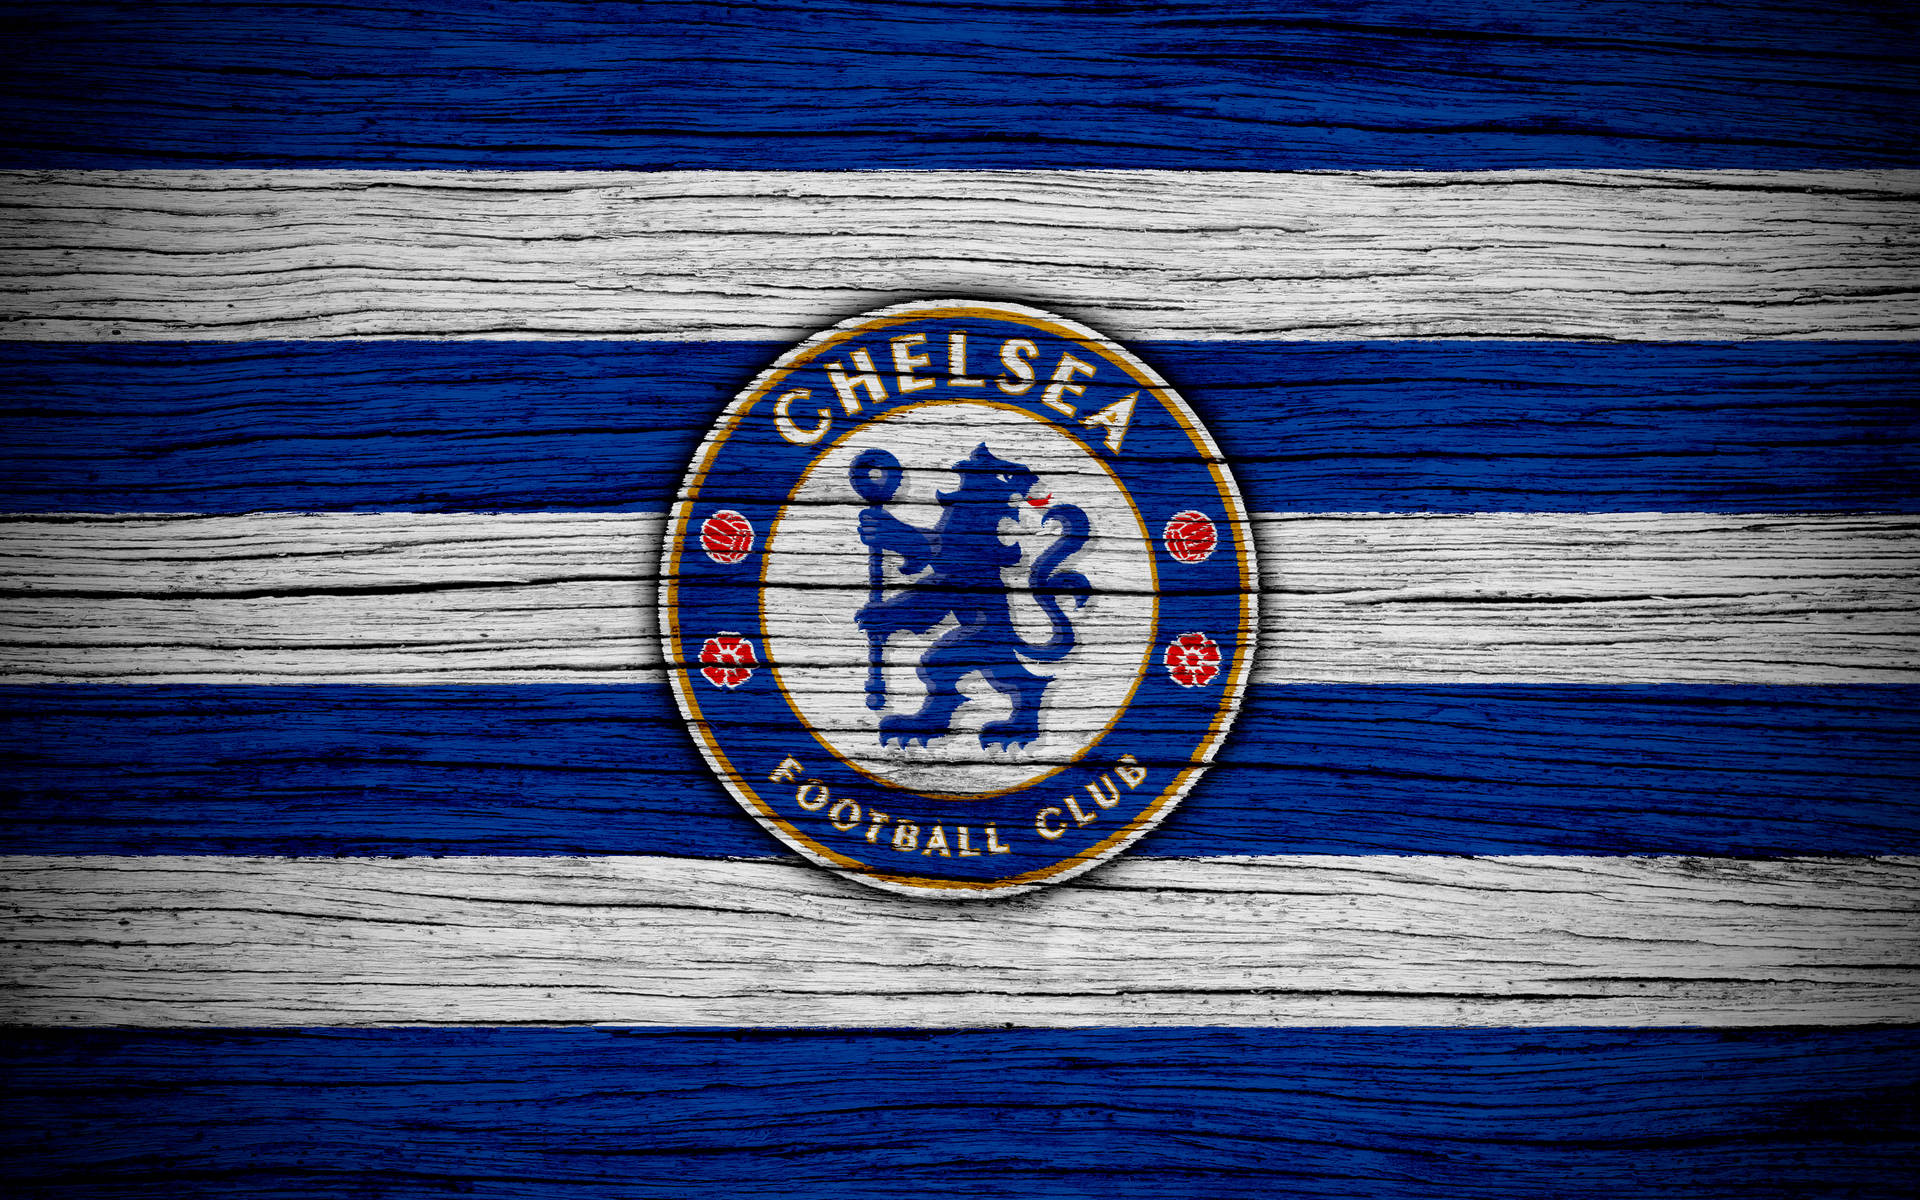 Chelsea Fc Logo On Striped Wood Wallpaper